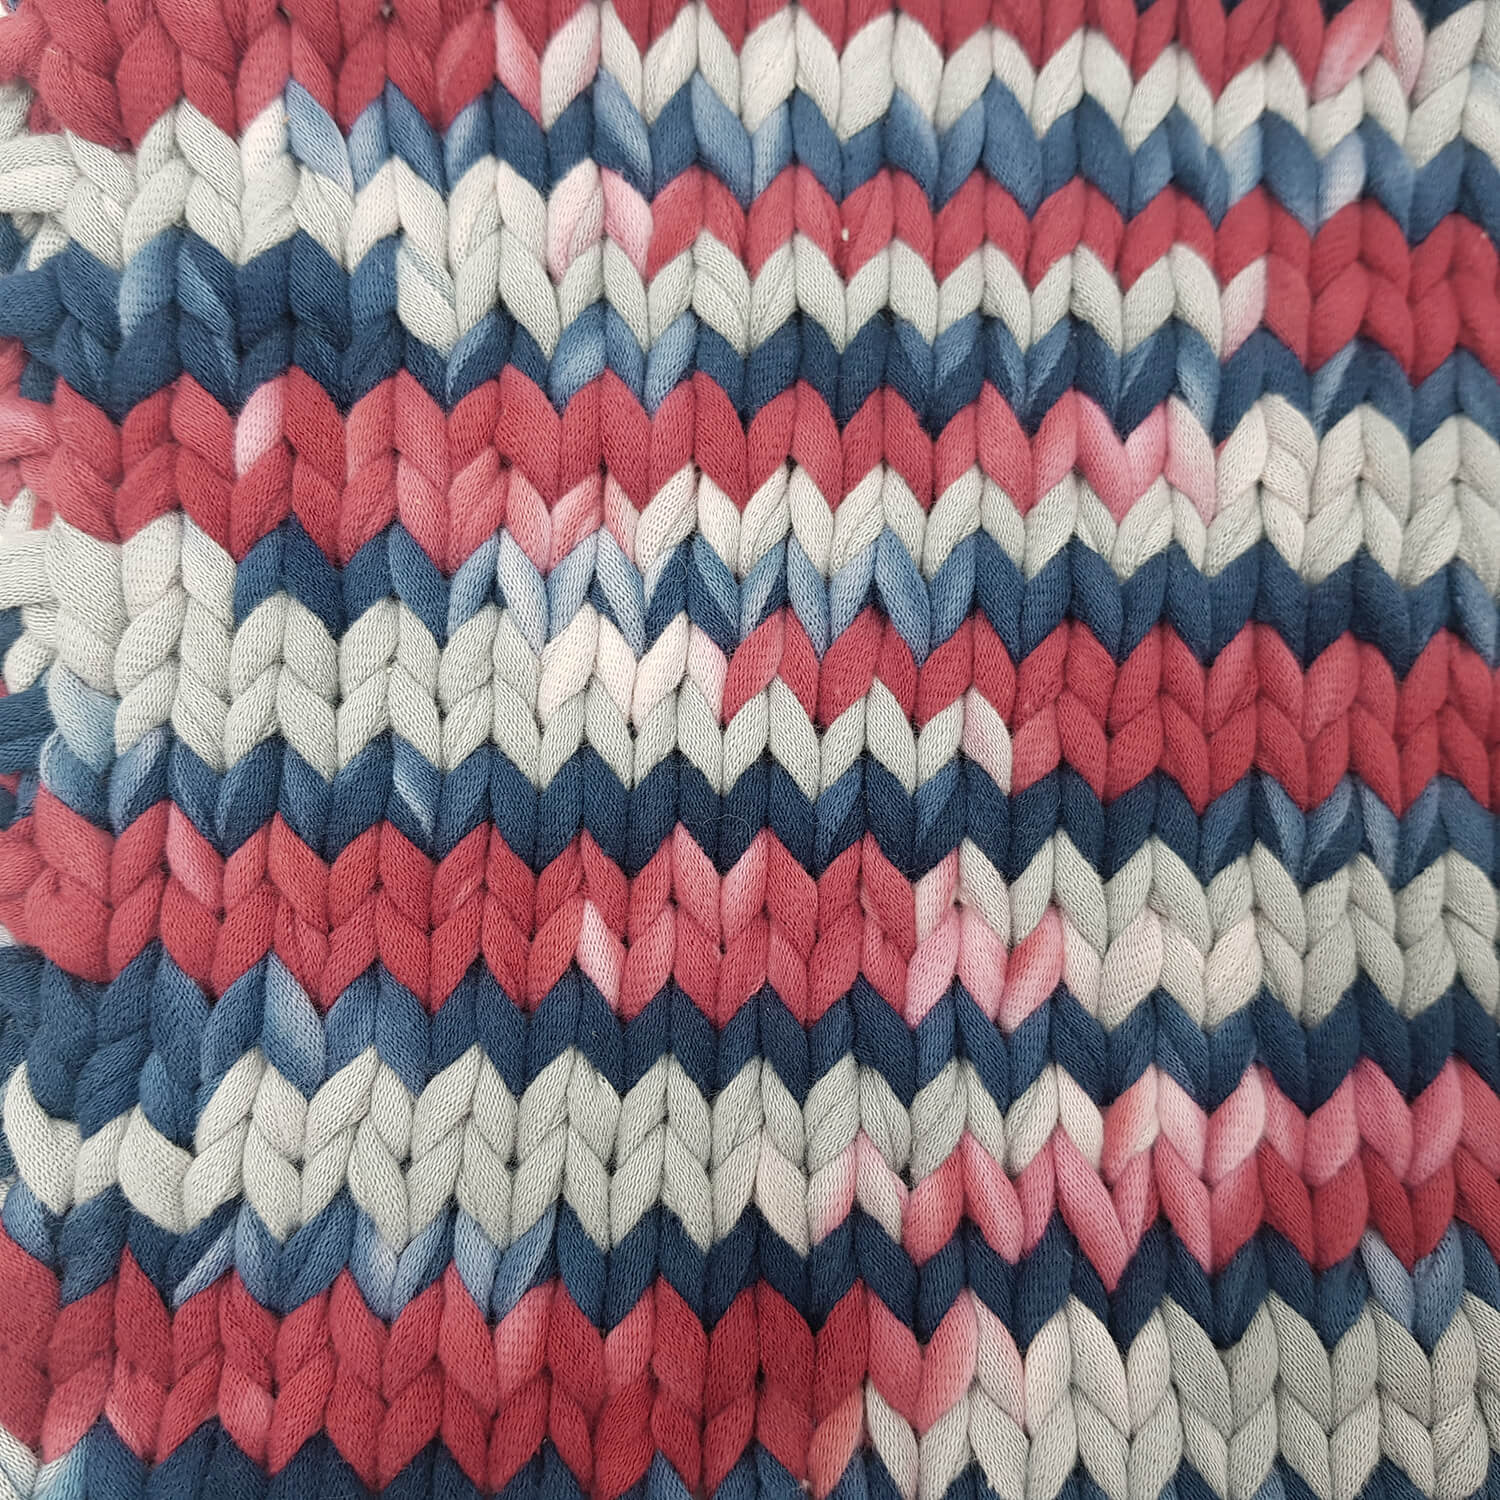 Kotton T-Shirt Yarn - Multi Color M14